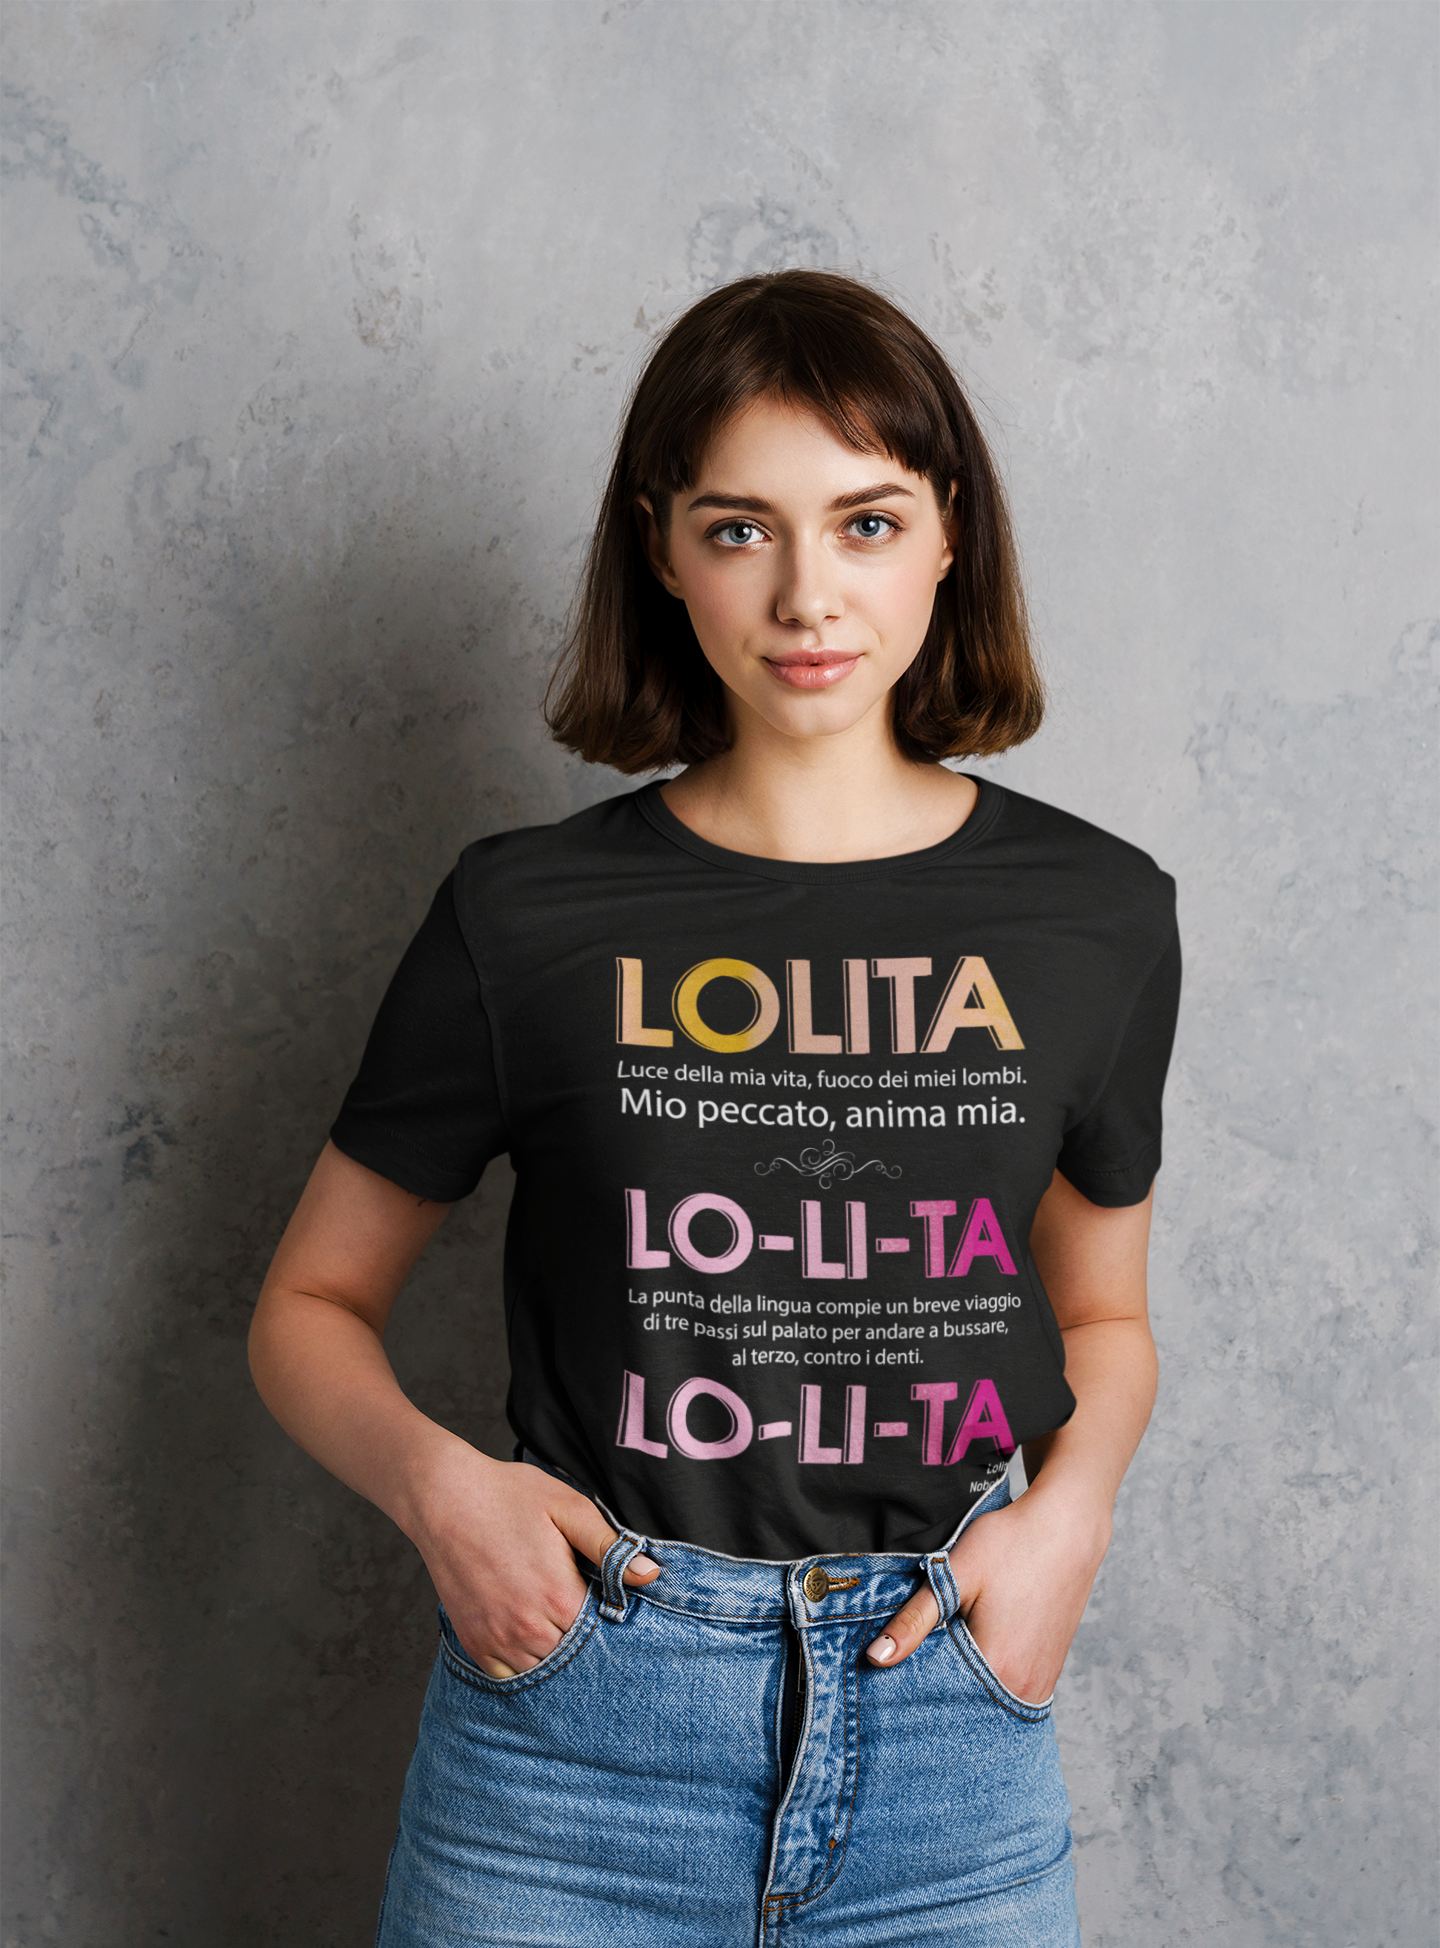 Smells Like New Book T-Shirt Lo - Li - Ta - Citazione Nobokov dal Libro Lolita